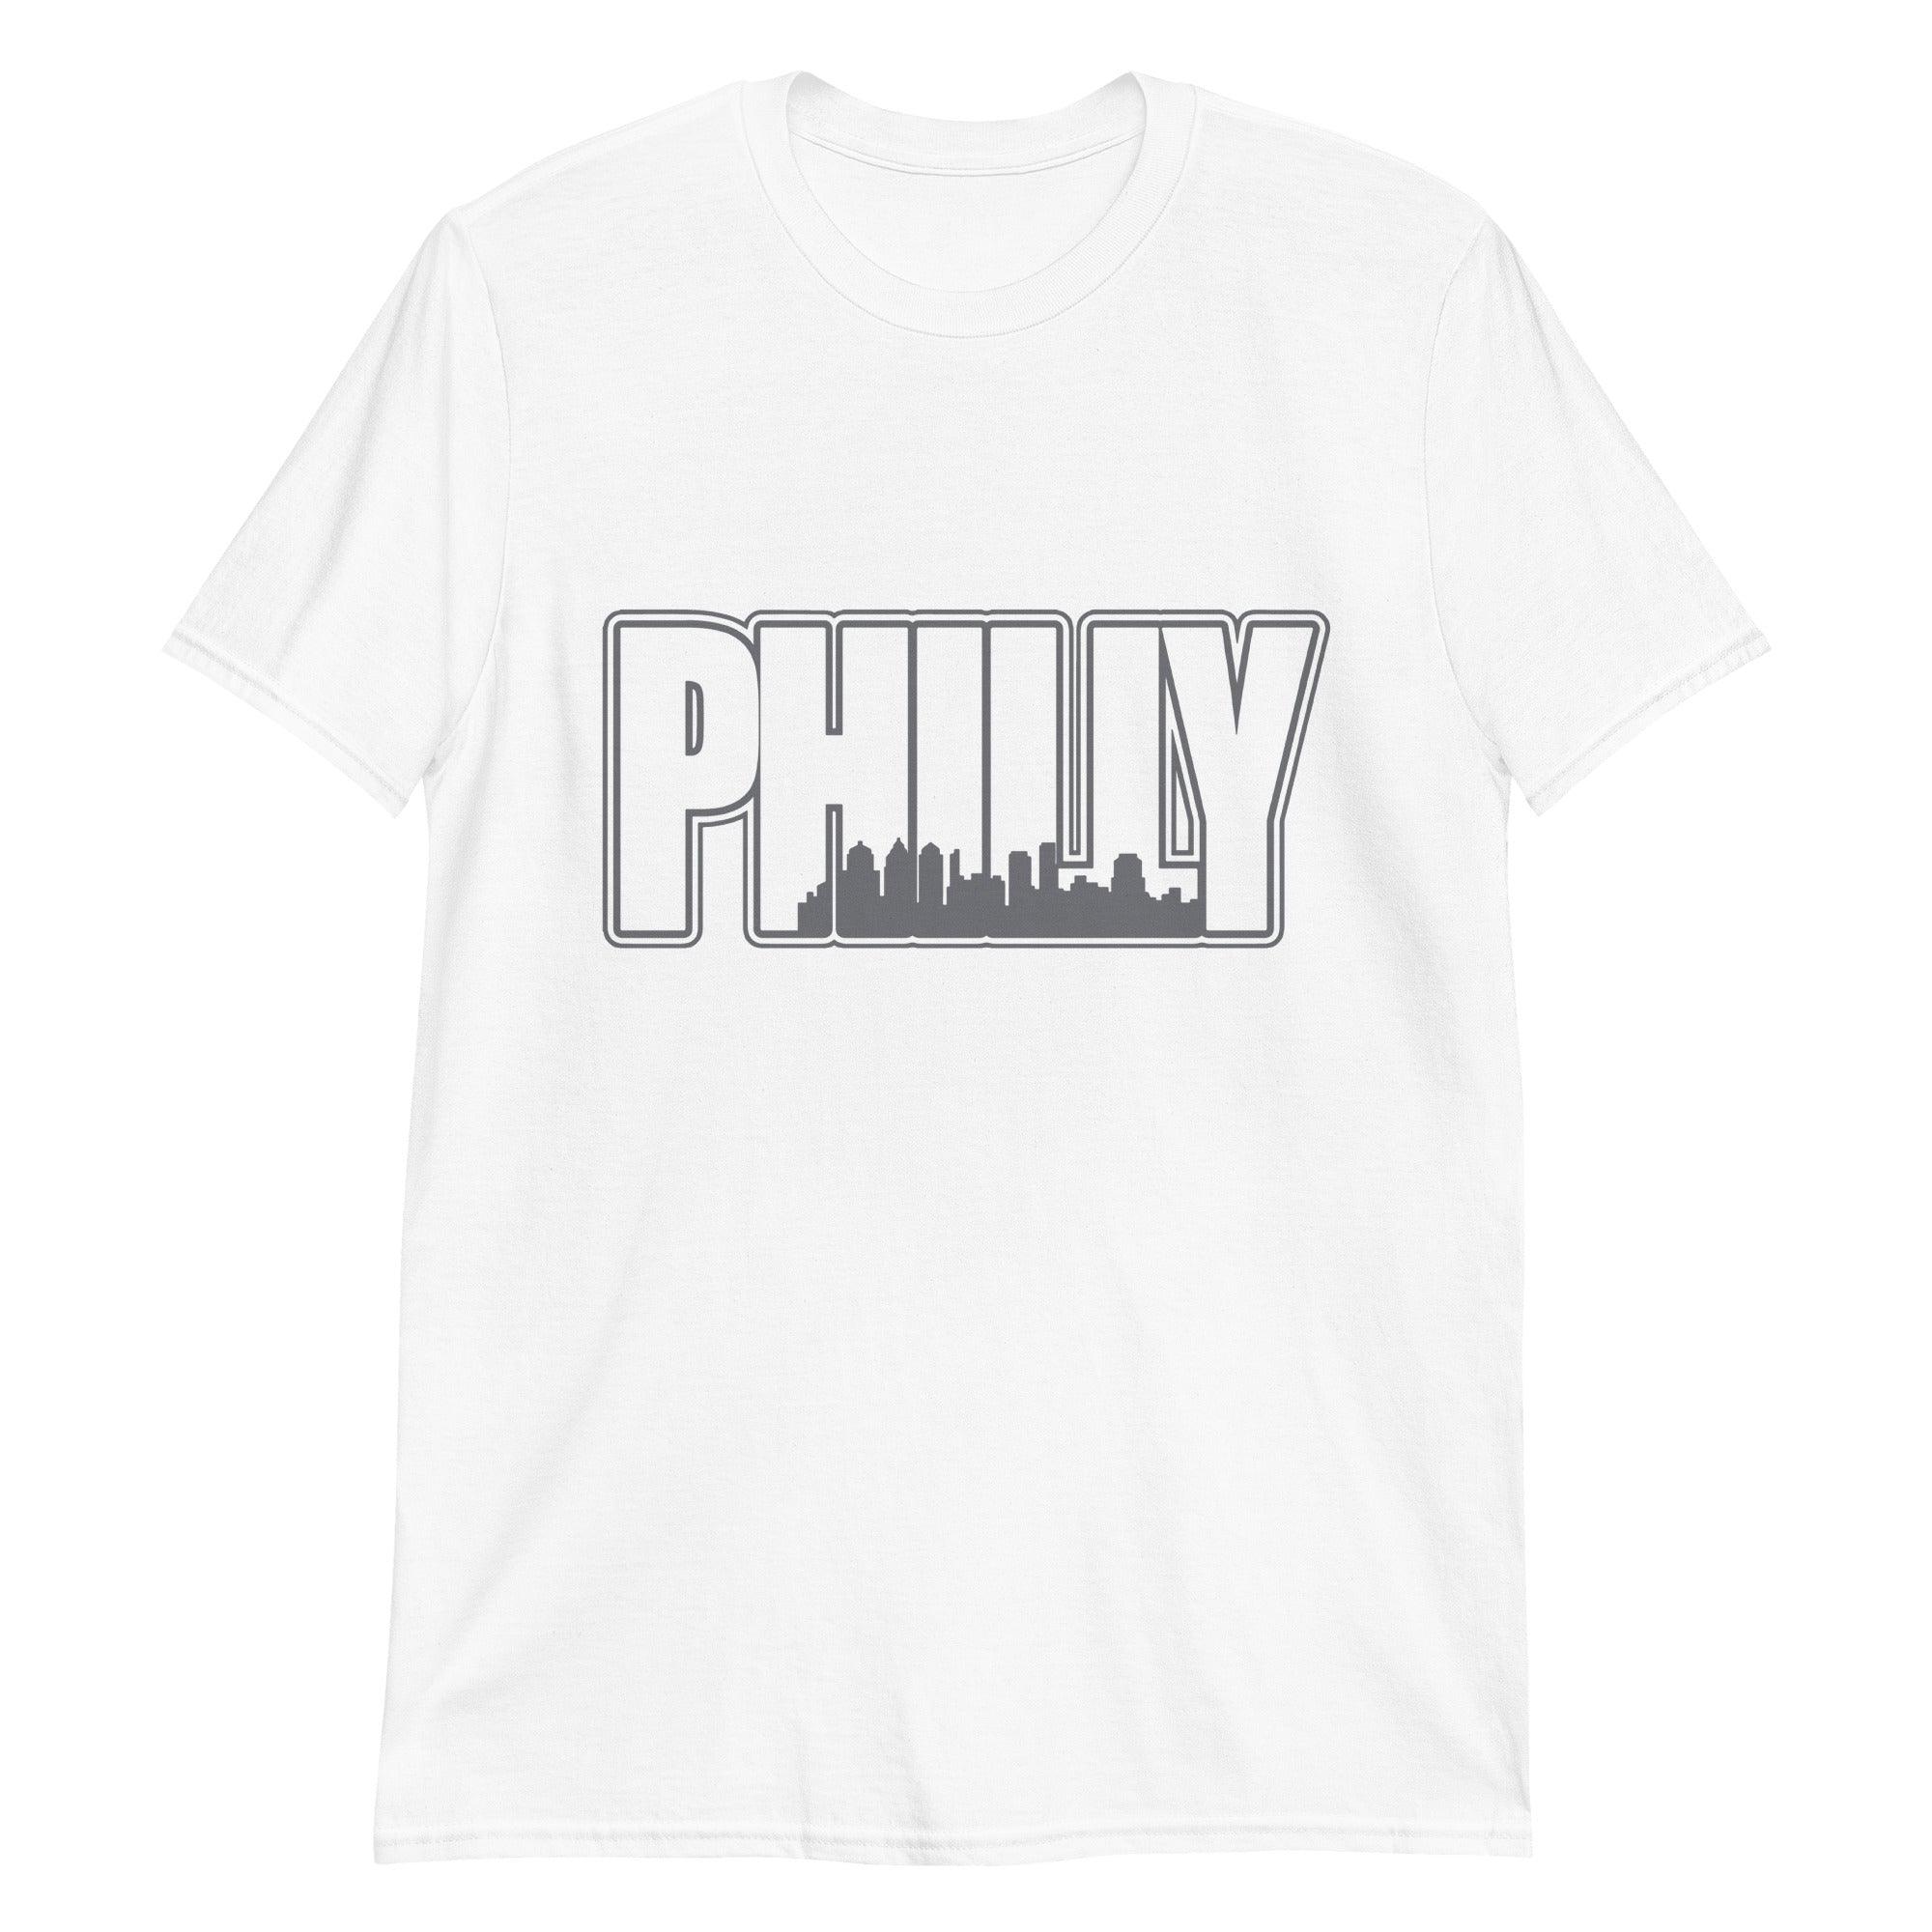 Philly shirt photo